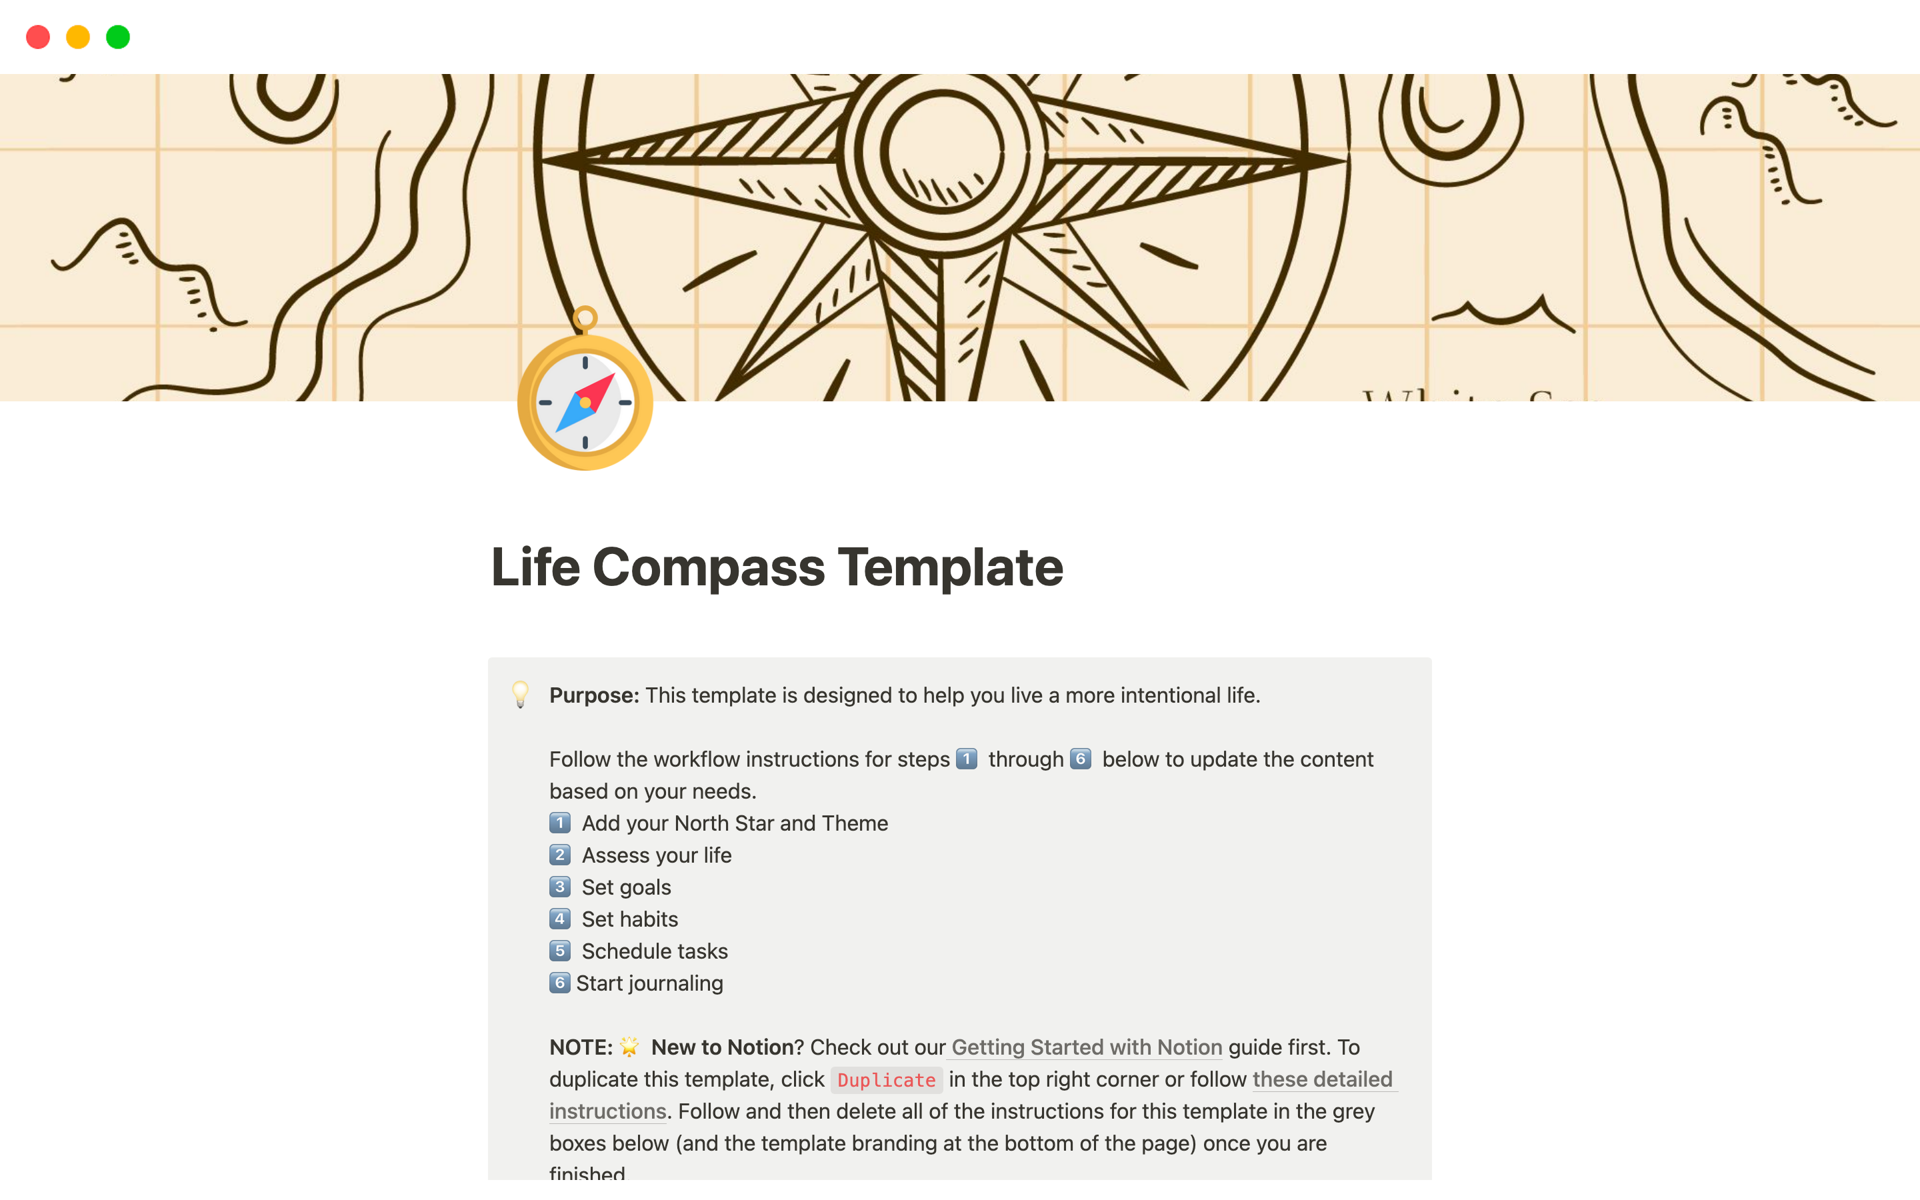 Aperçu du modèle de Life Compass Template